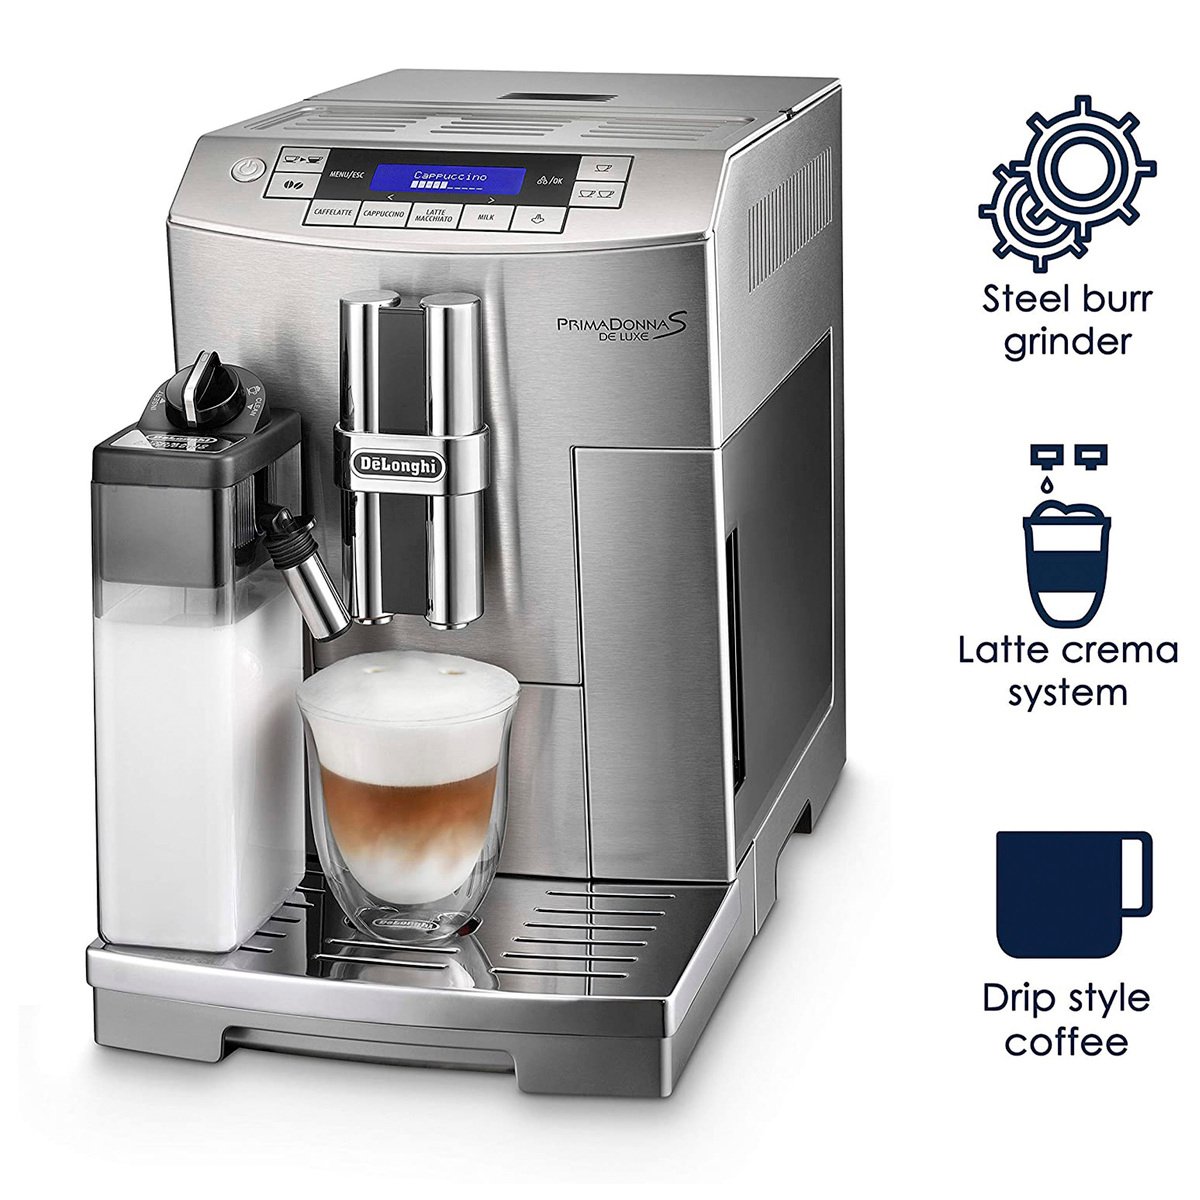 Delonghi Fully Automatic Coffee Machine ECAM 28.465.M